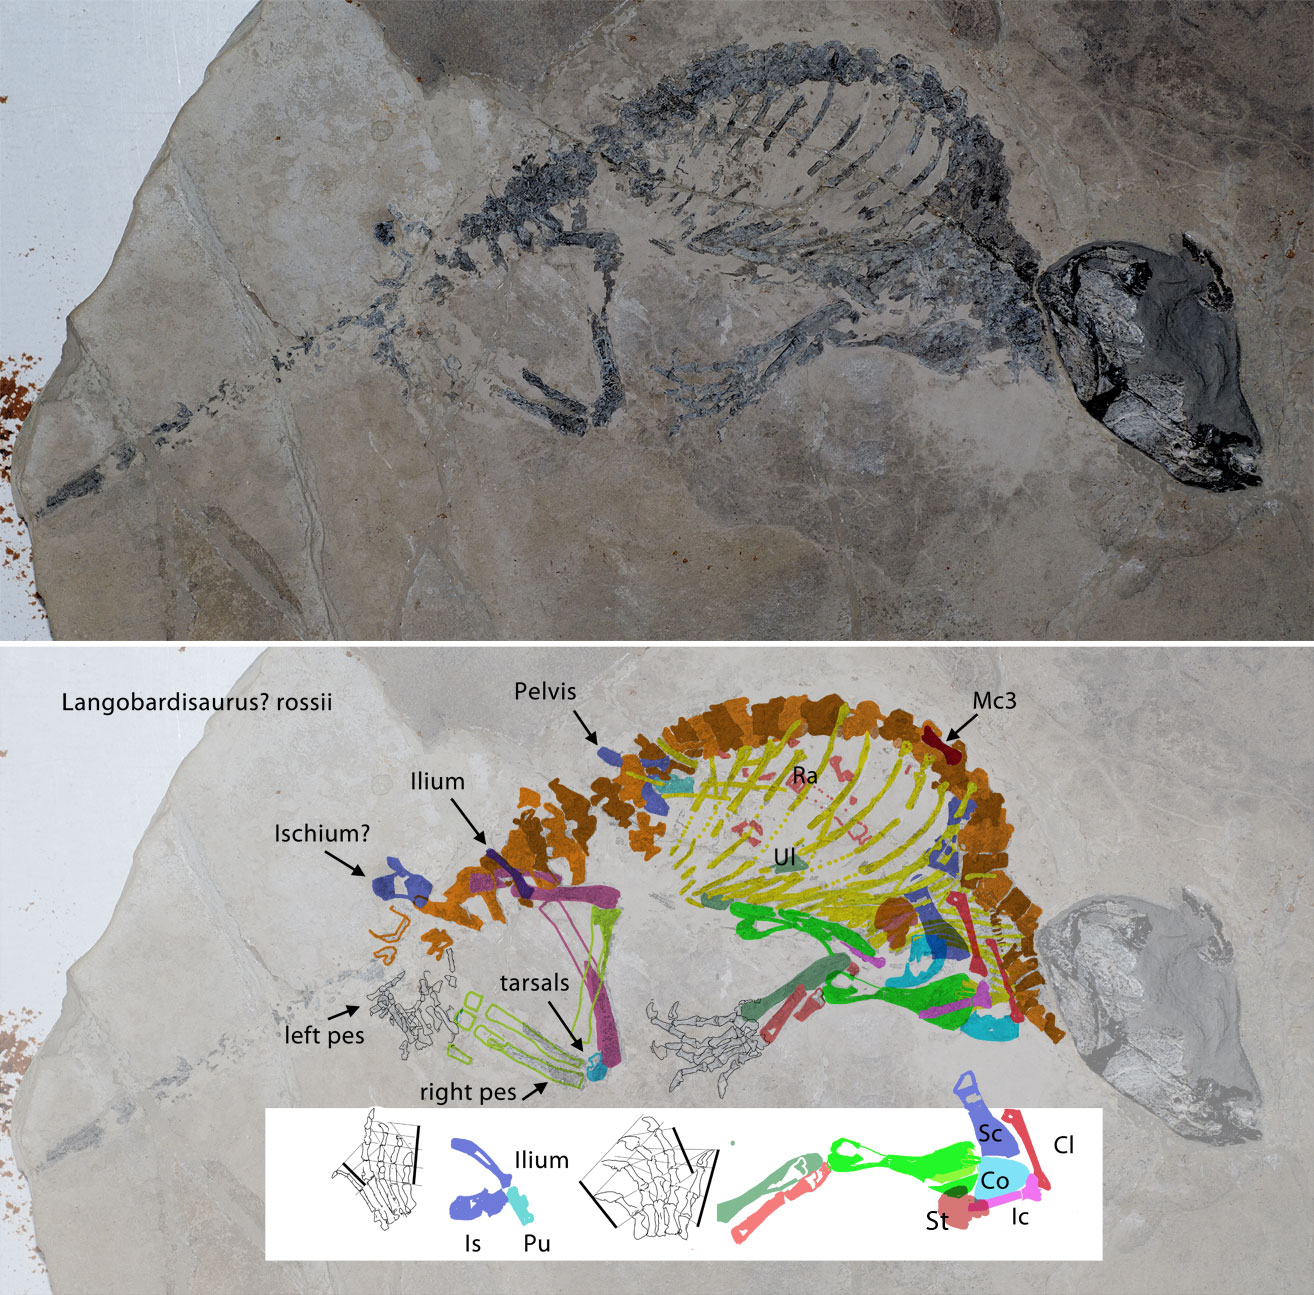 Renestosaurus rossii and the DGS method